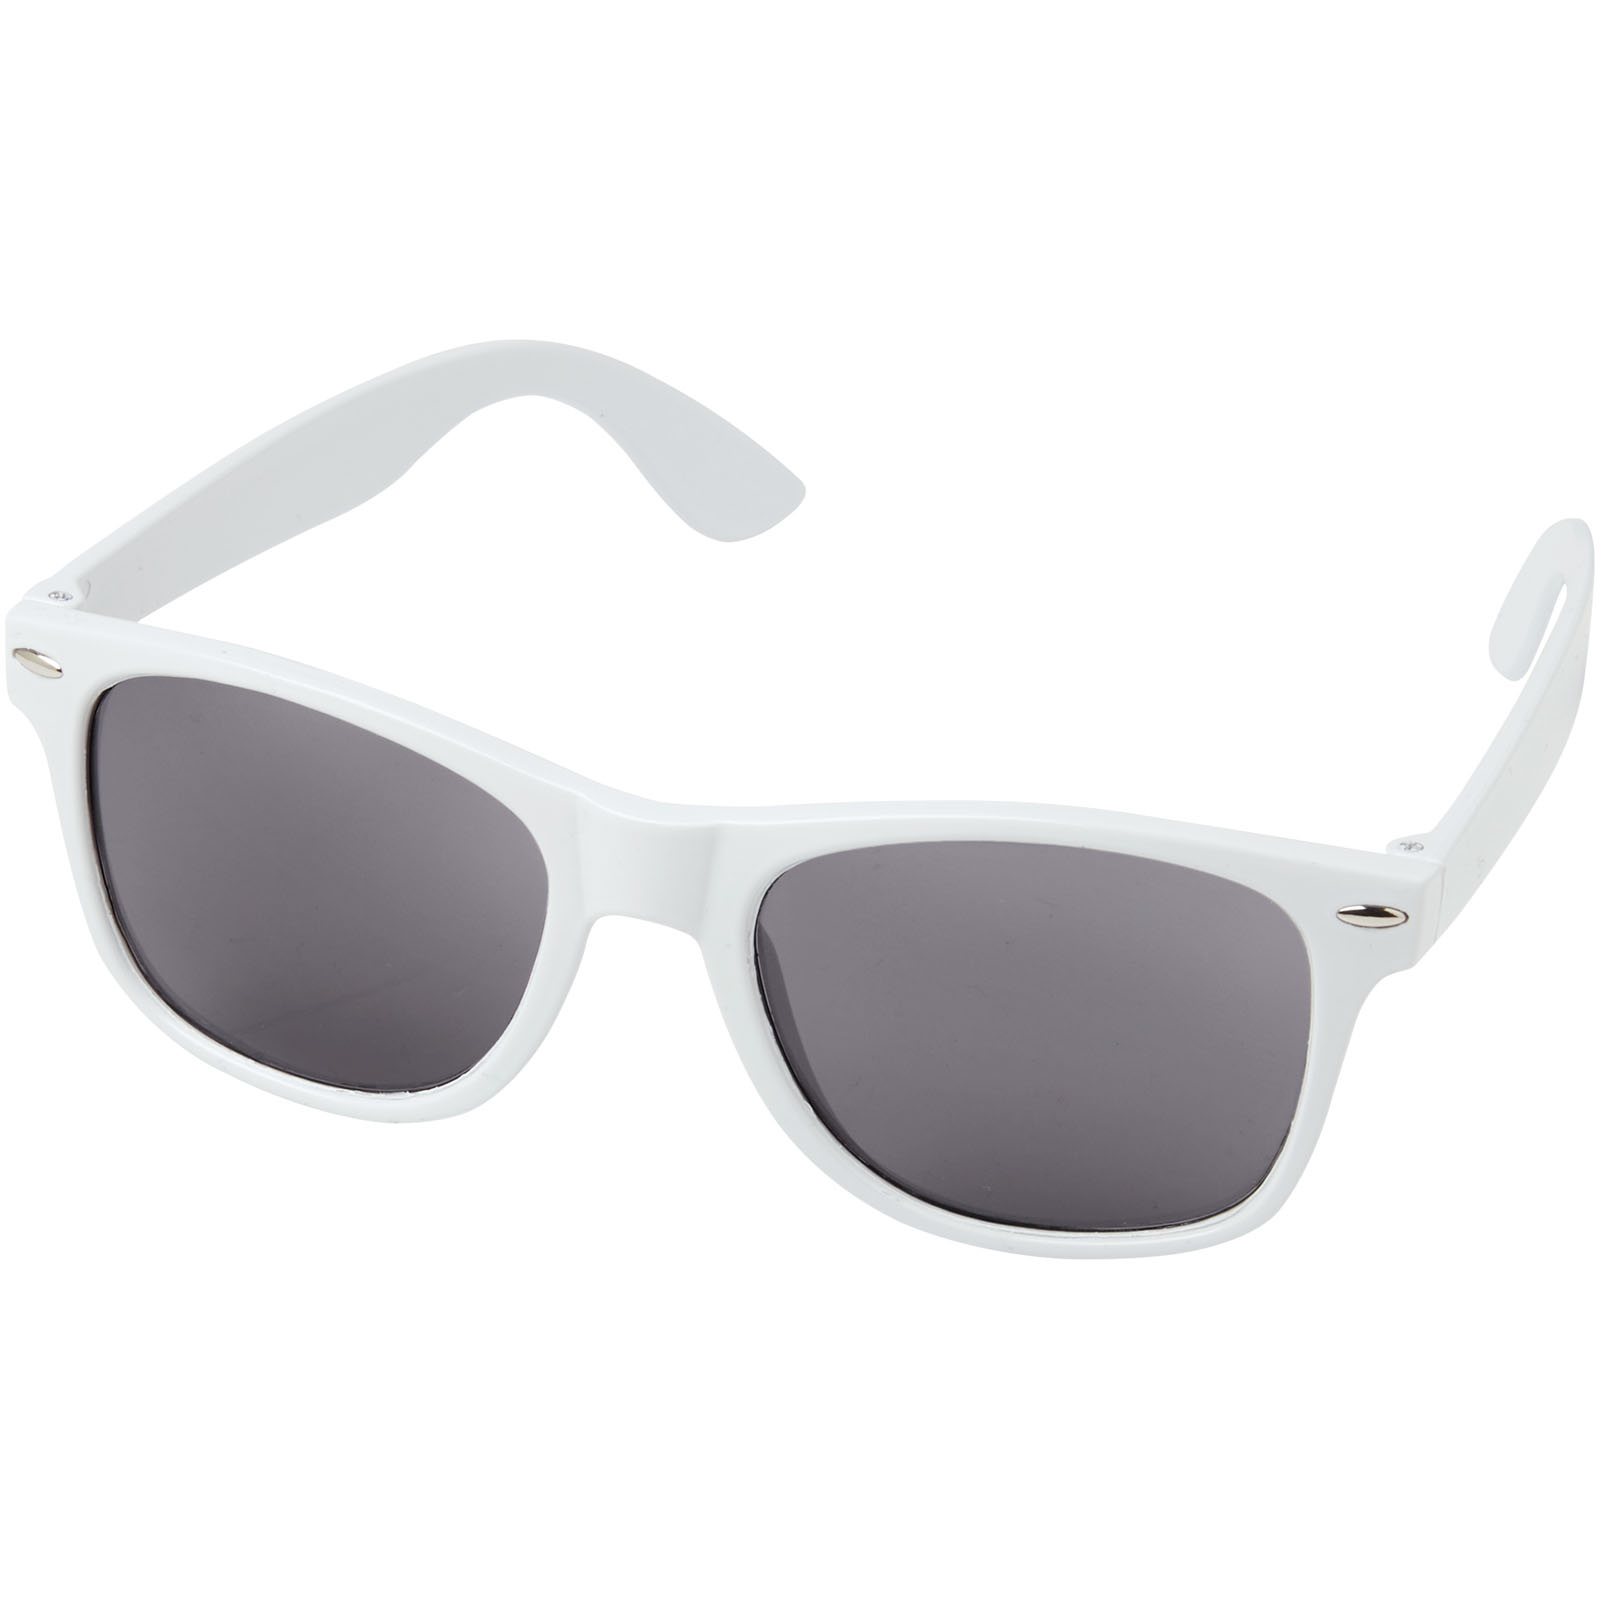 Advertising Sunglasses - Sun Ray rPET sunglasses